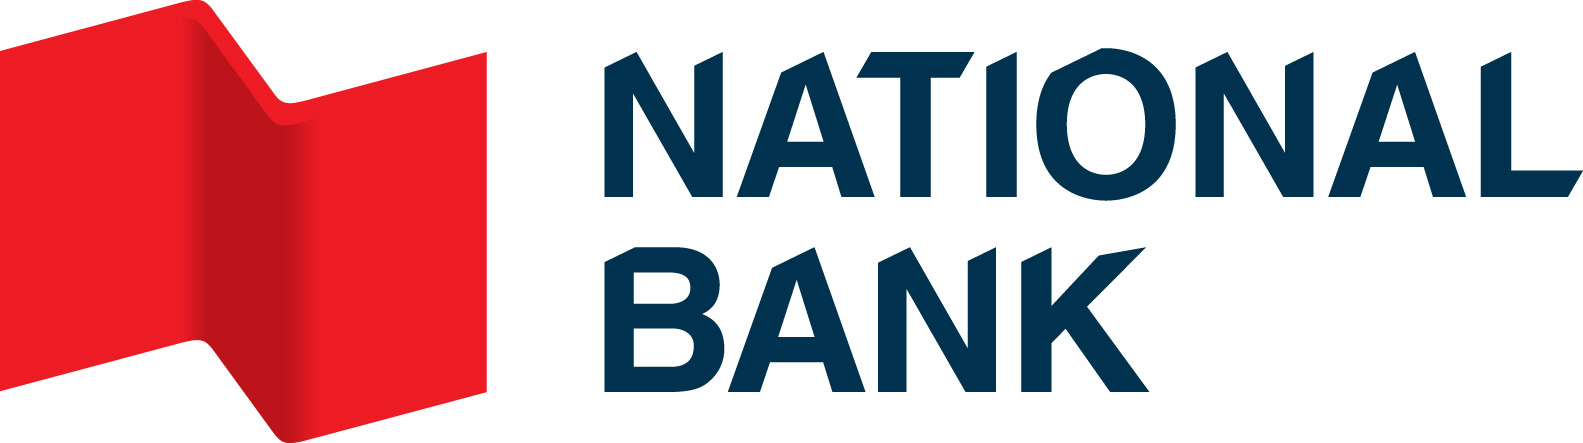 nationalbank